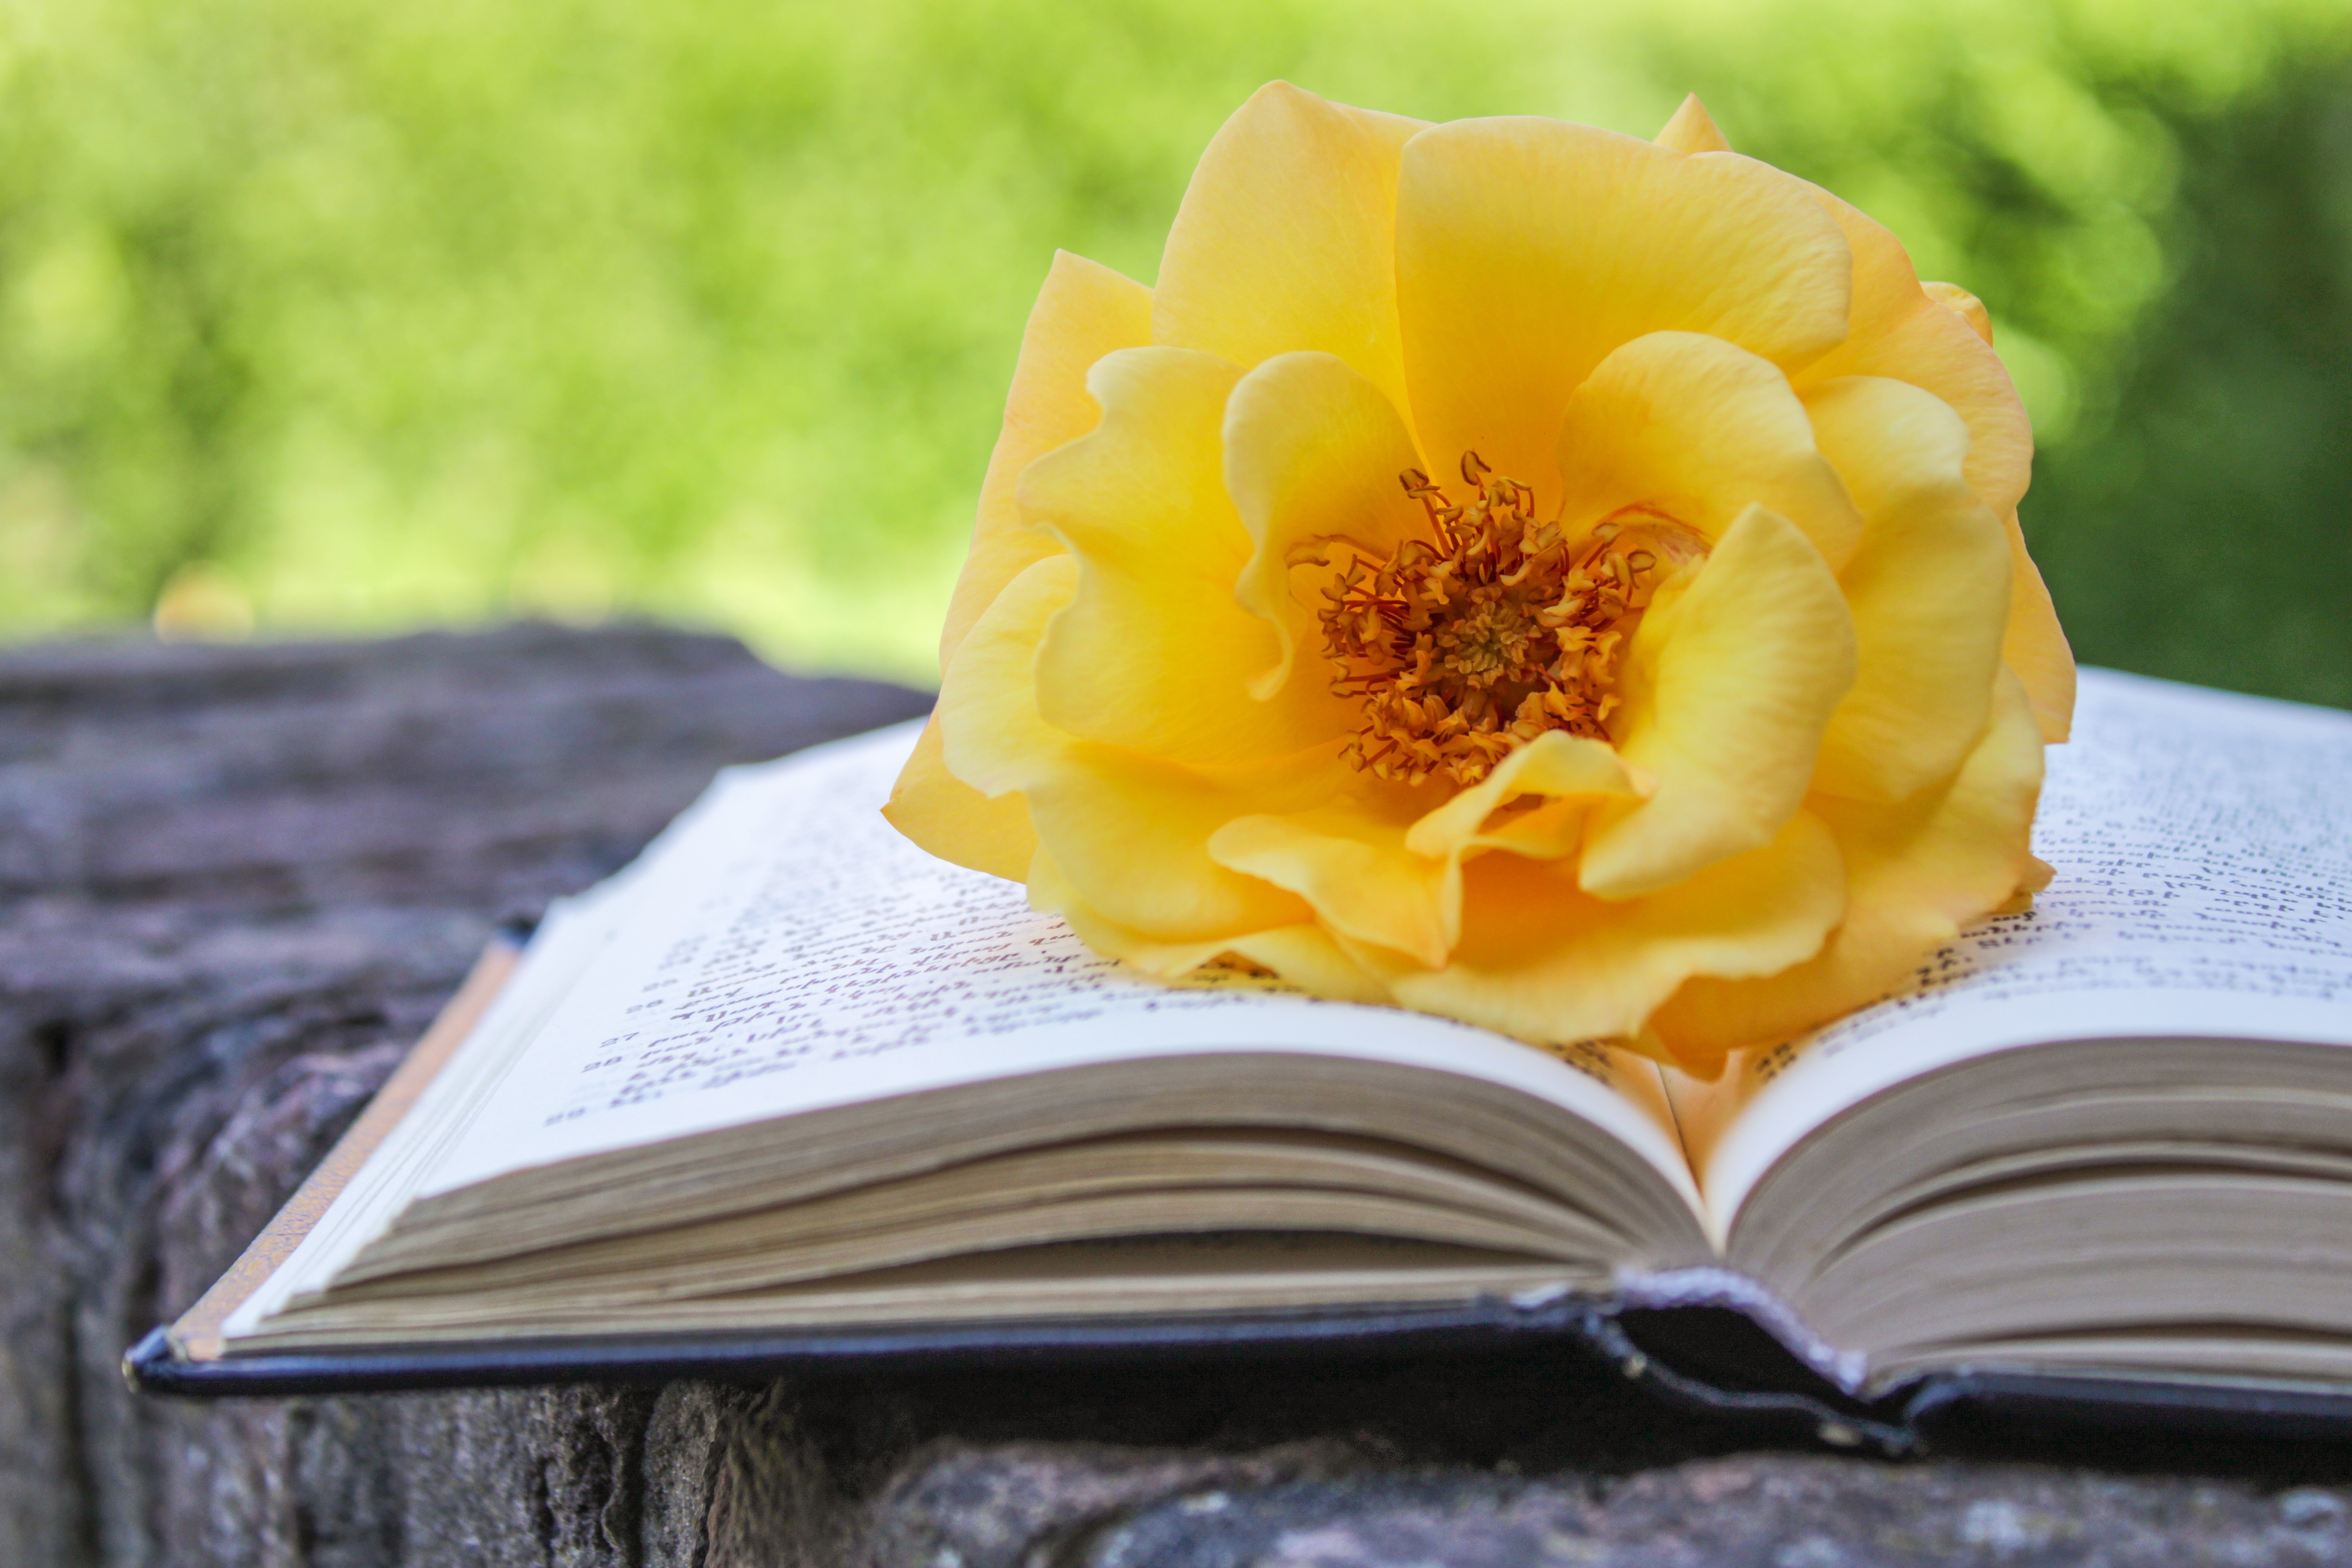 Книга цвет жизни. Книга цветы. Книга с цветами. Книга с желтой обложкой. Книги картинки.